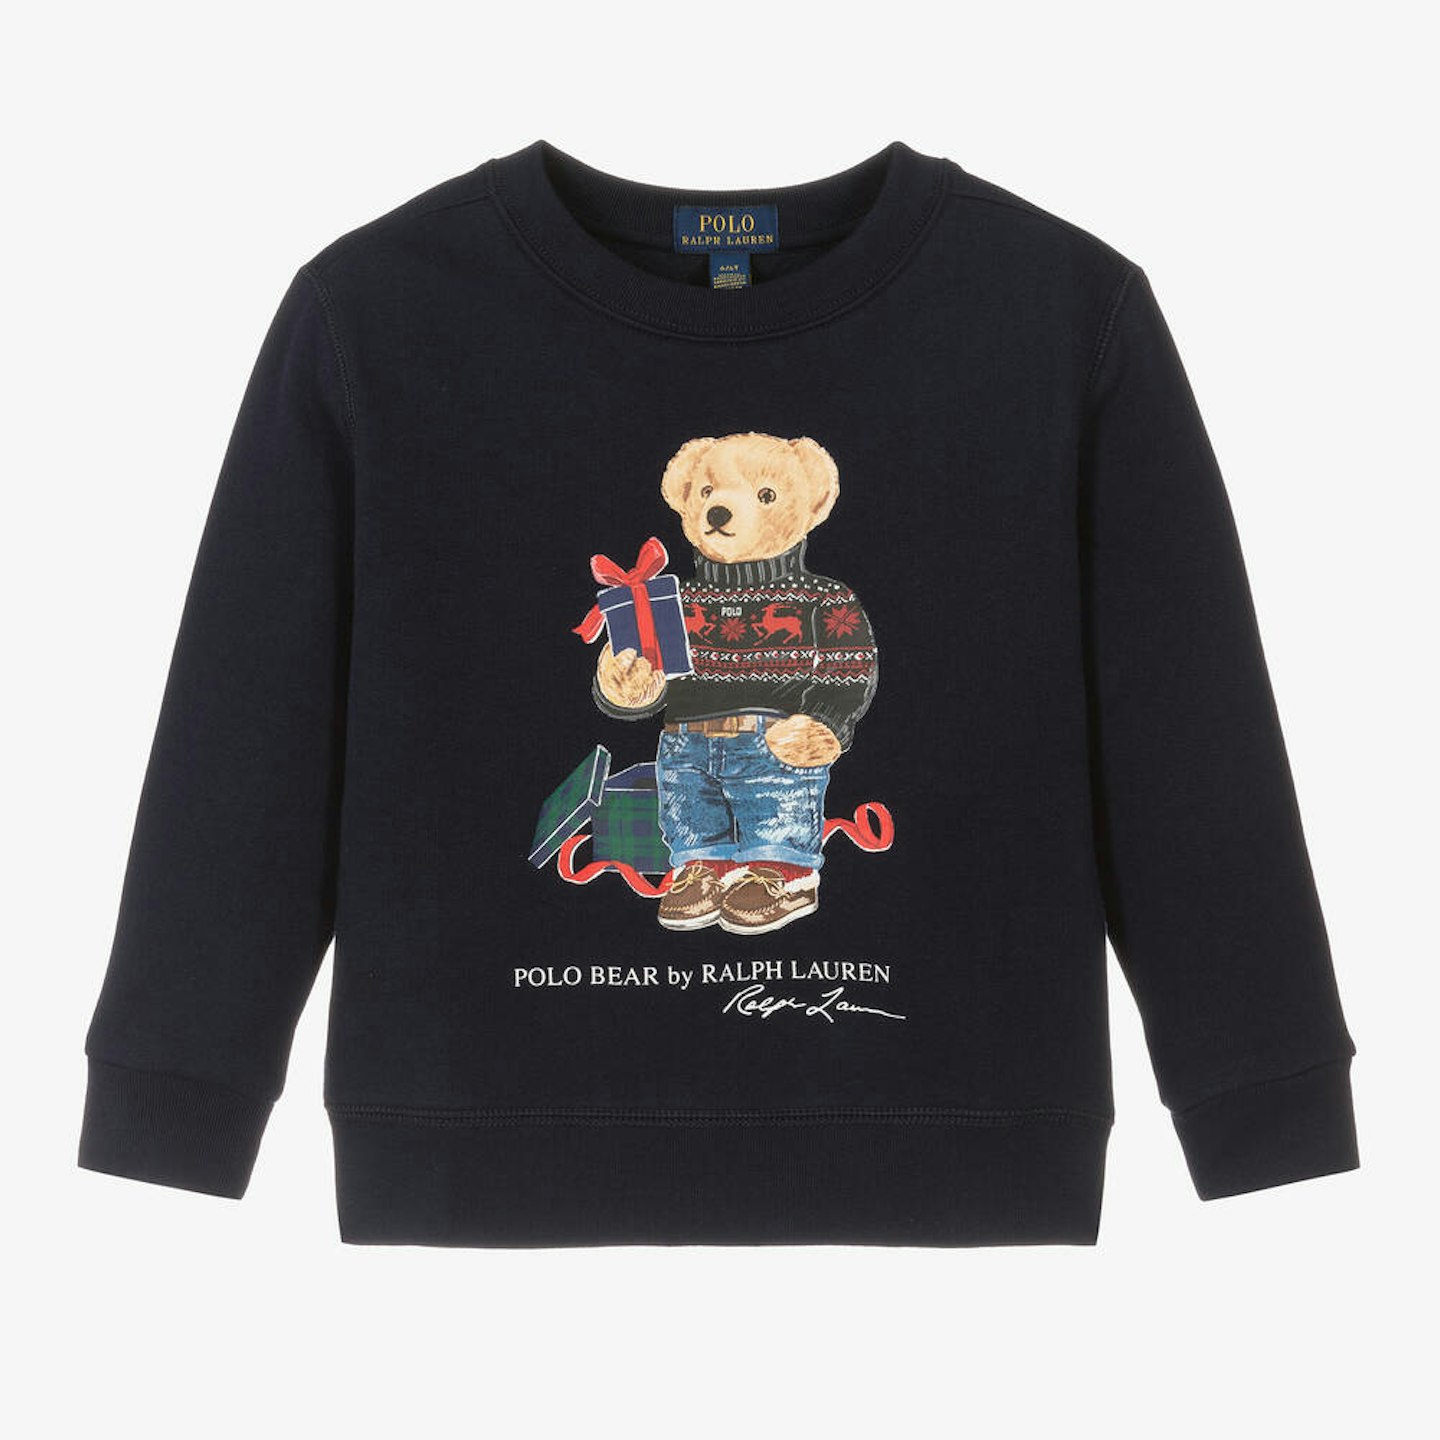 Best Christmas Gifts For Kids: Ralph Lauren Boys Navy Blue Polo Bear Sweatshirt